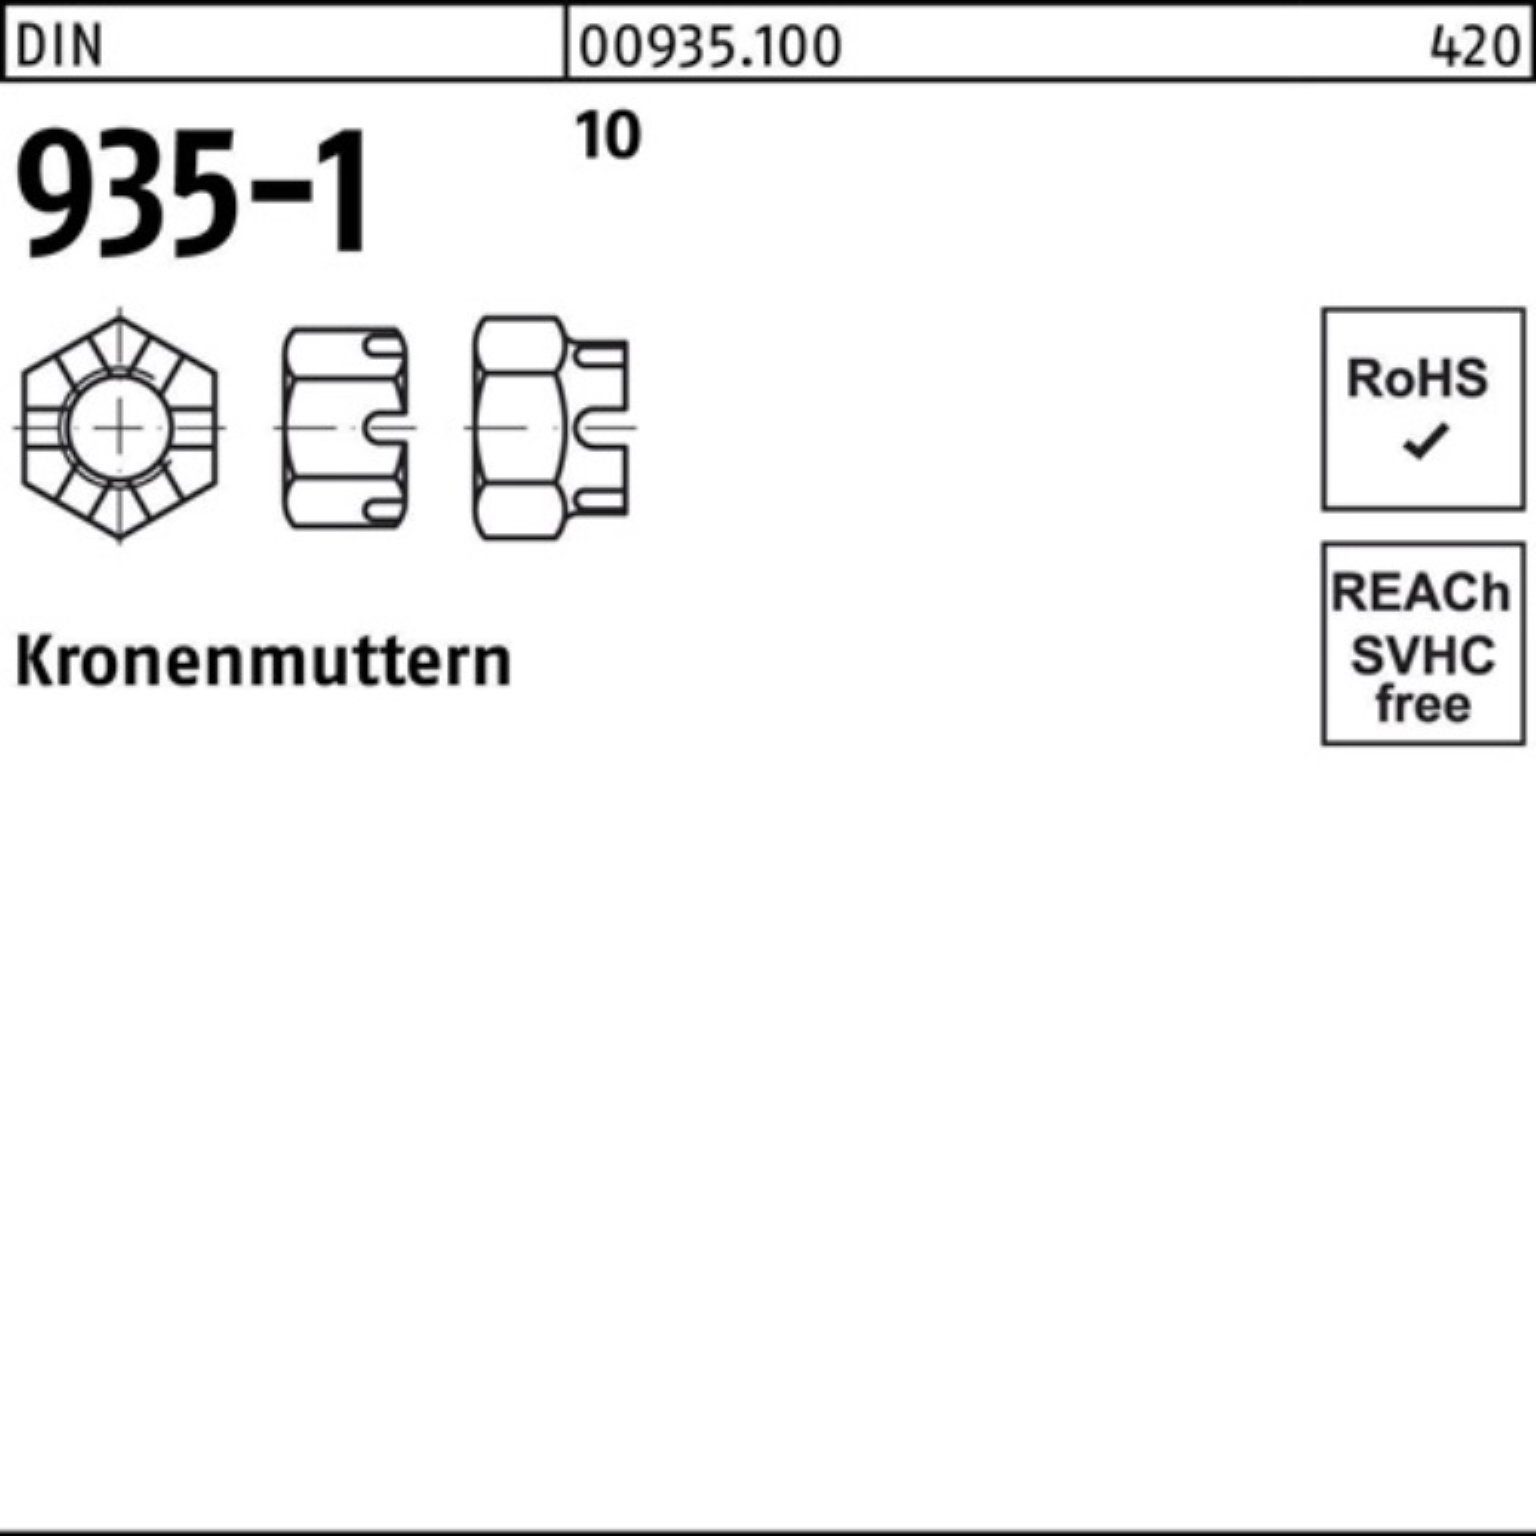 Reyher Kronenmutter 100er Pack Kronenmutter DIN 935-1 M24 10 25 Stück DIN 935-1 10 Kronen